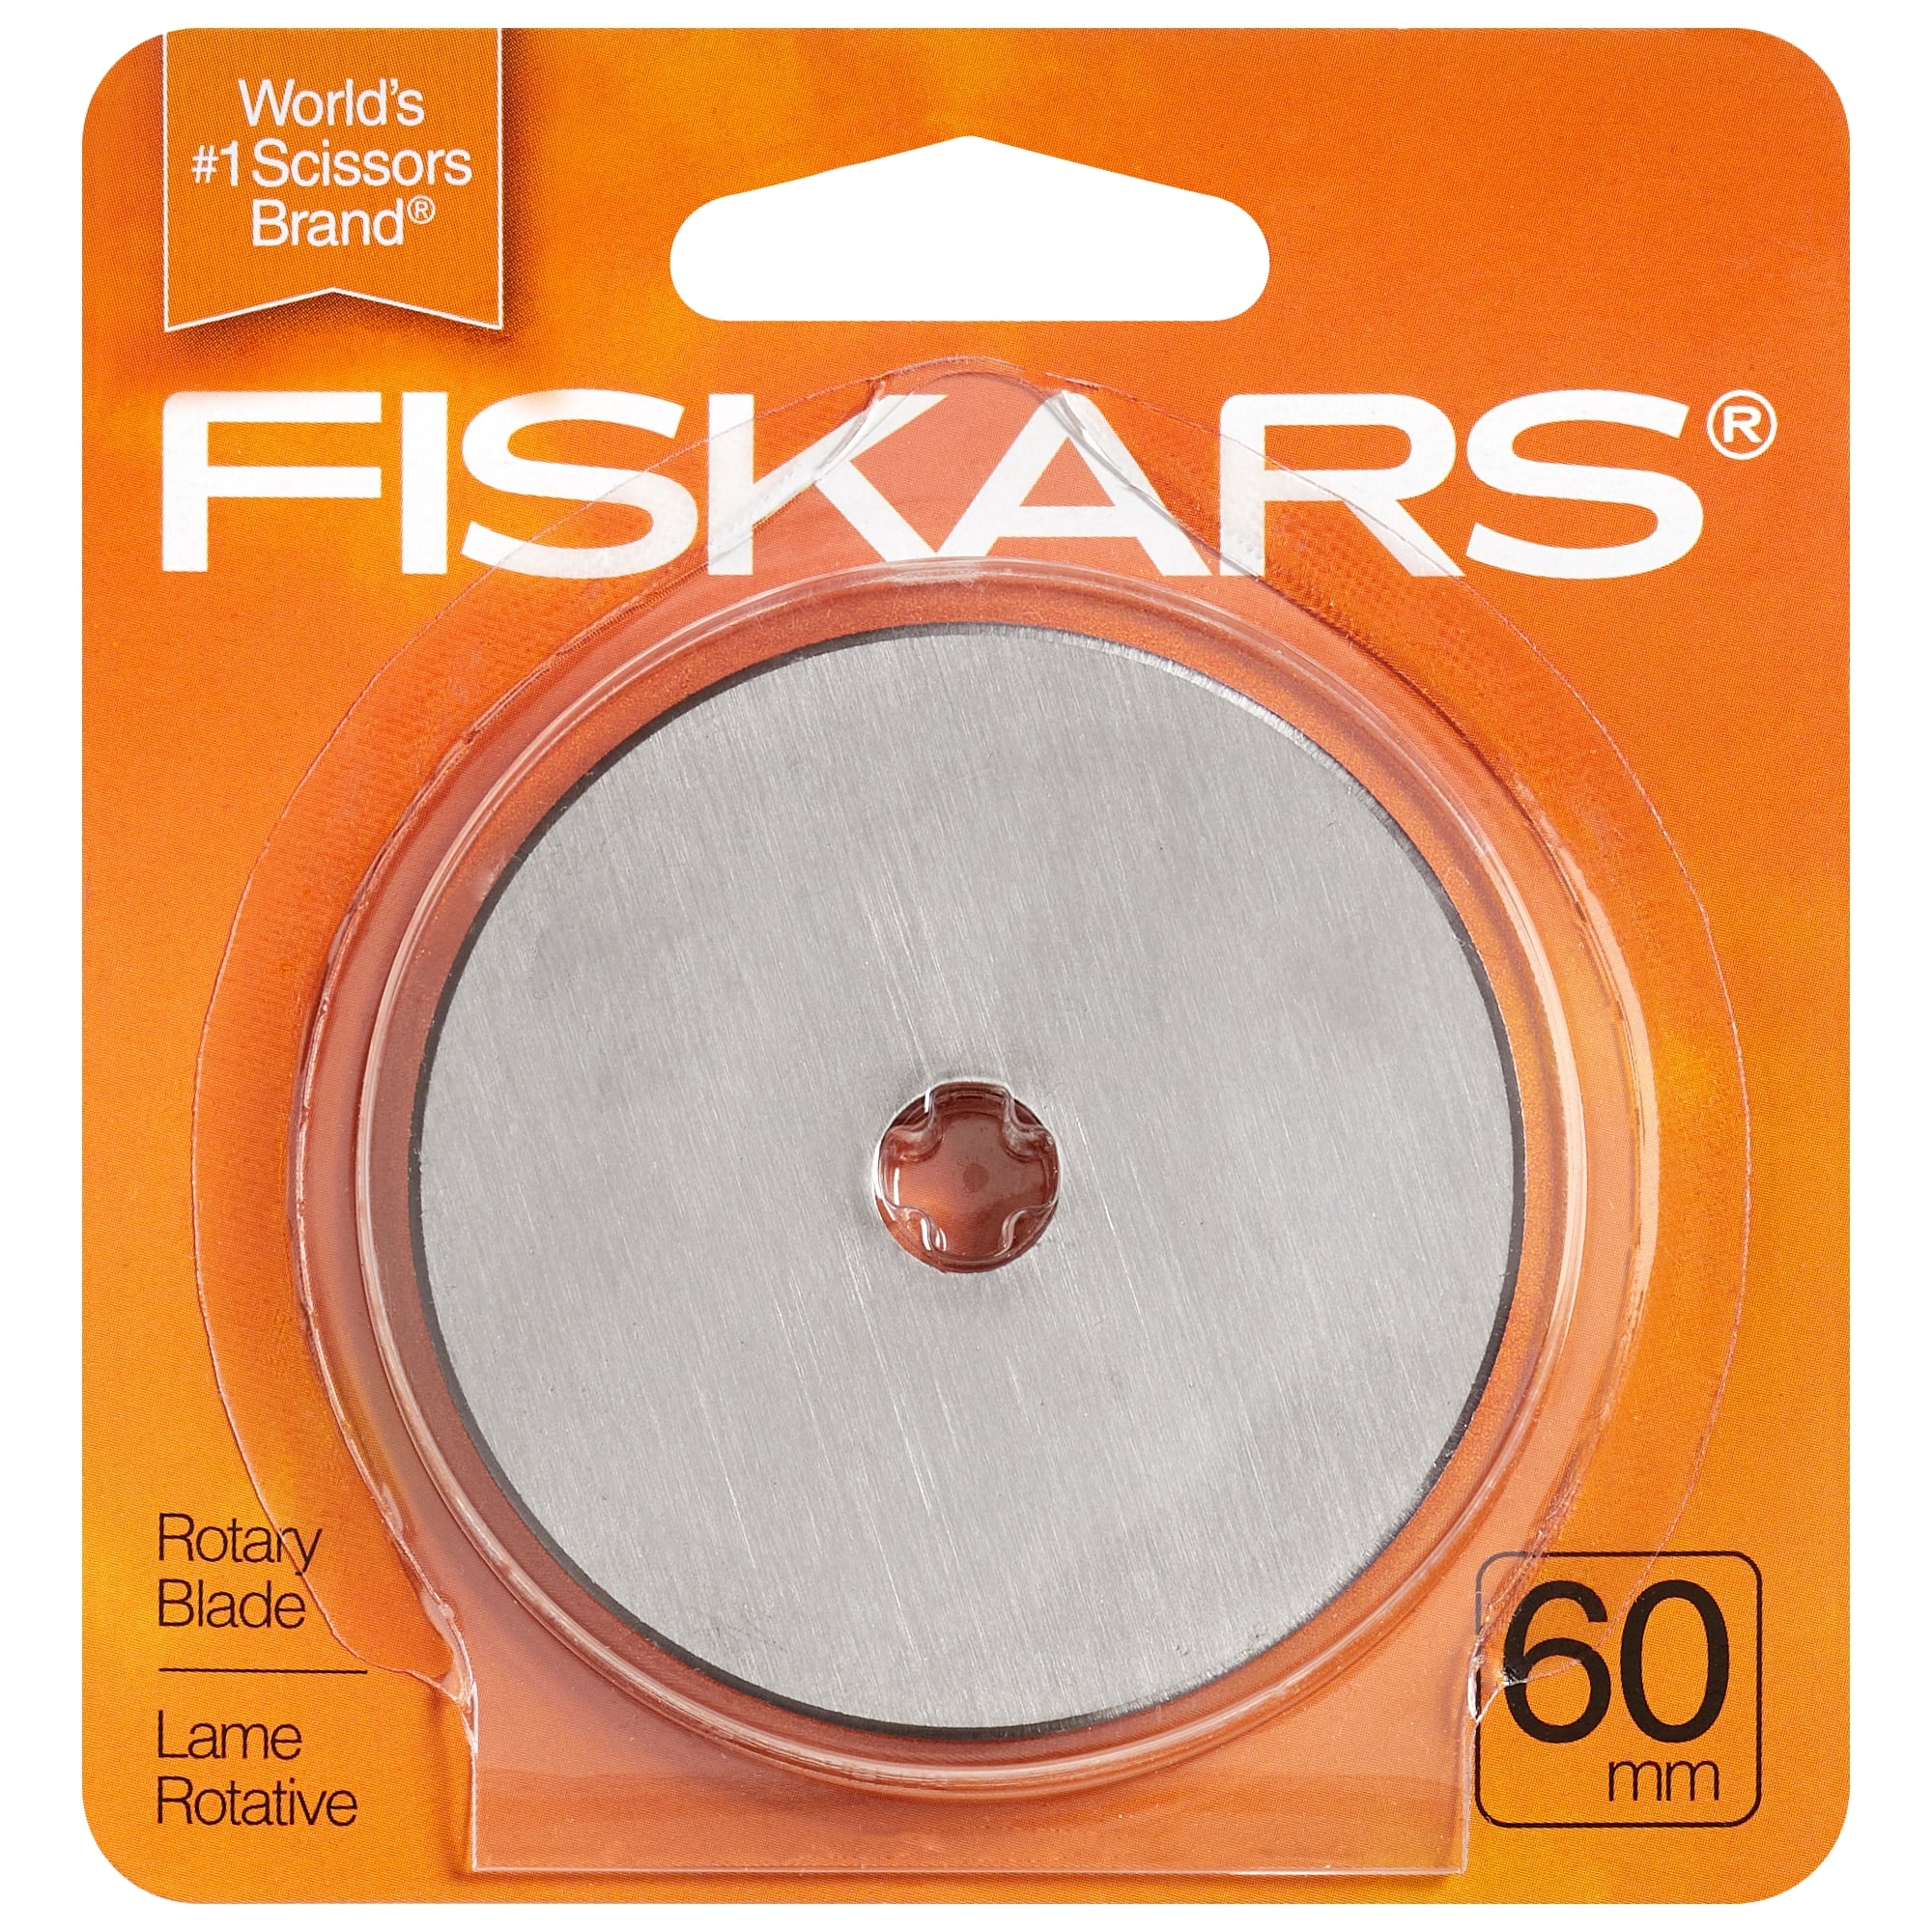 Fiskars 60mm Titanium Rotary Cutter Review 